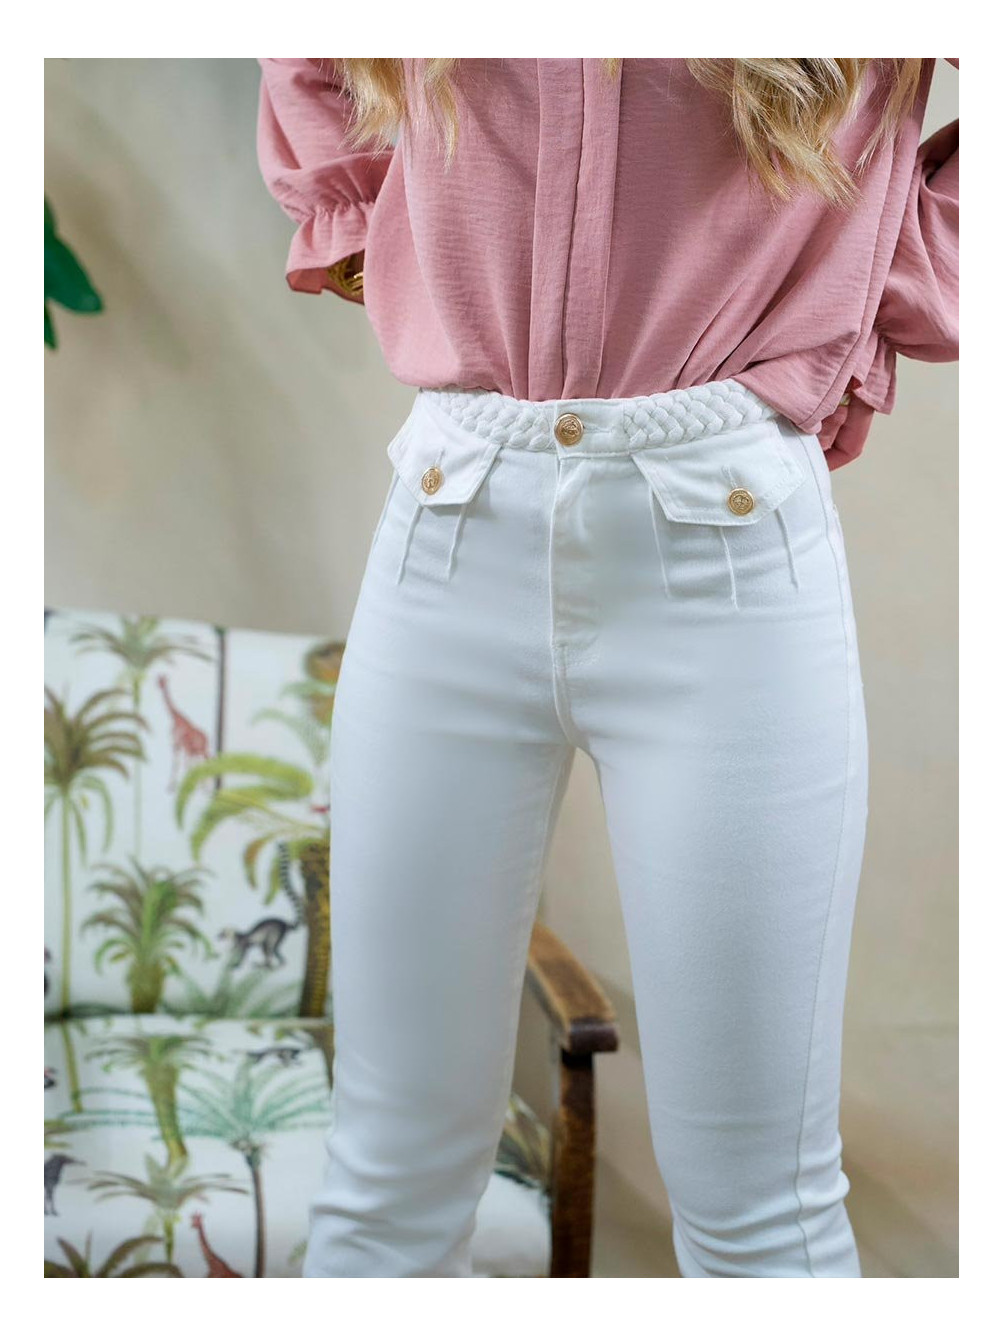 Jeans Cinturilla | Jeans Blanco Mujer | Mariquita Trasquilá